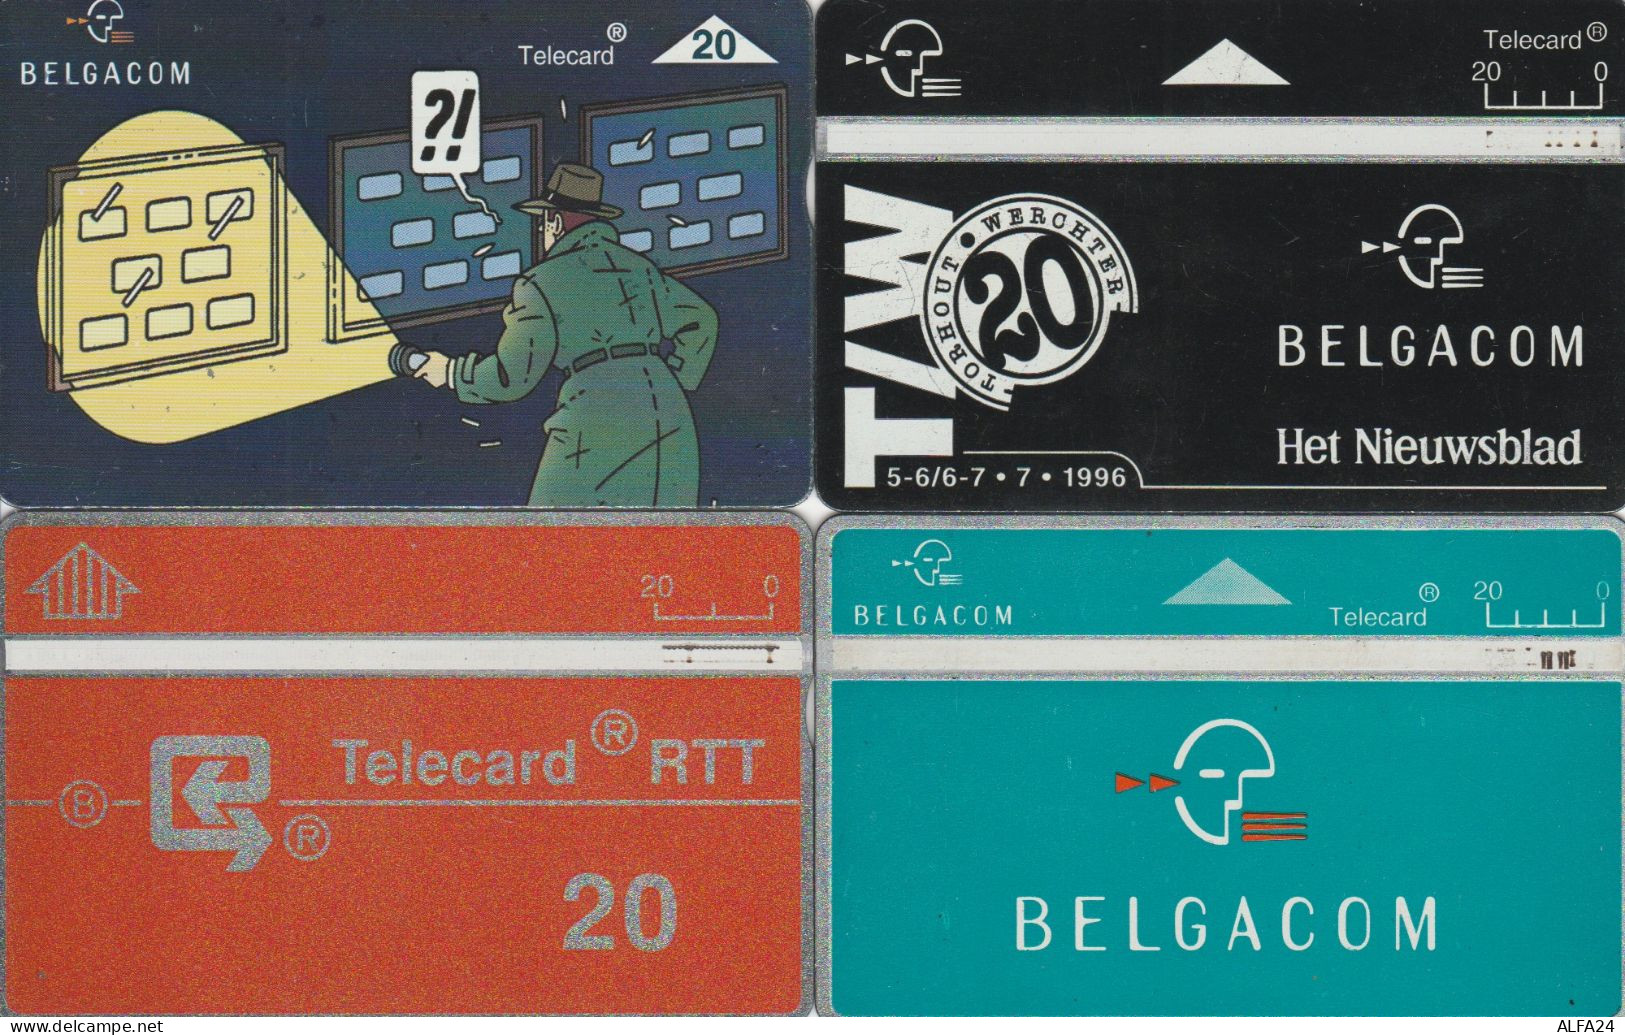 PHONE CARD 4 BELGIO LANDYS (CK941 - Ohne Chip